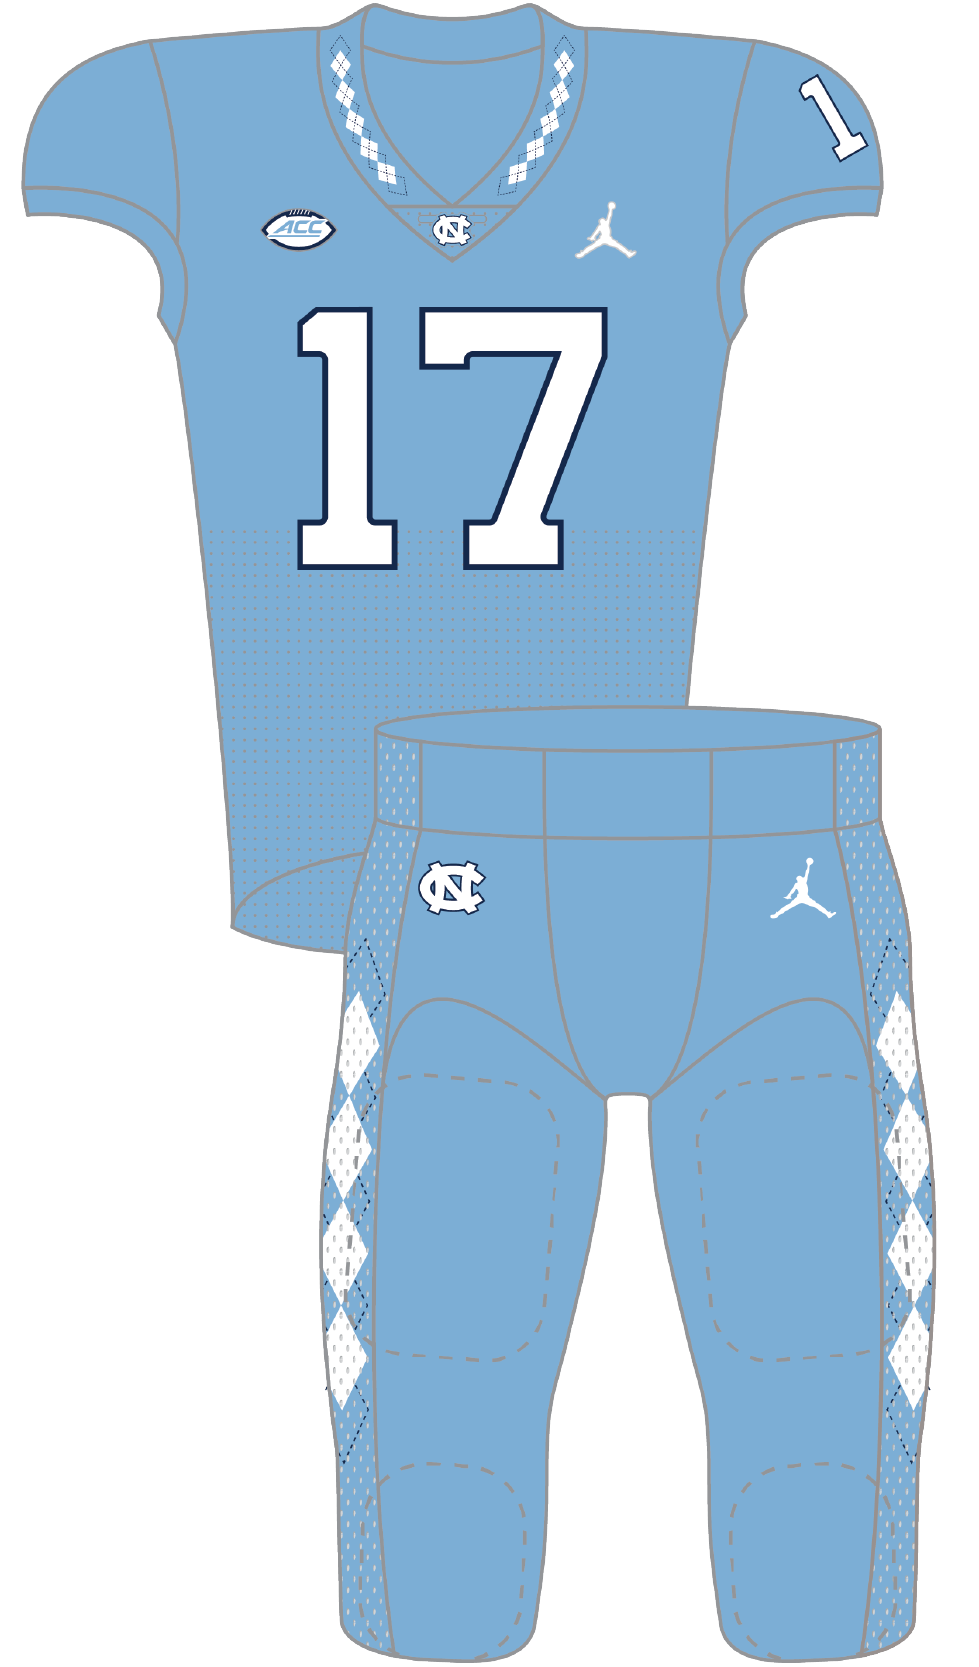 North Carolina 2017 Blue Uniform